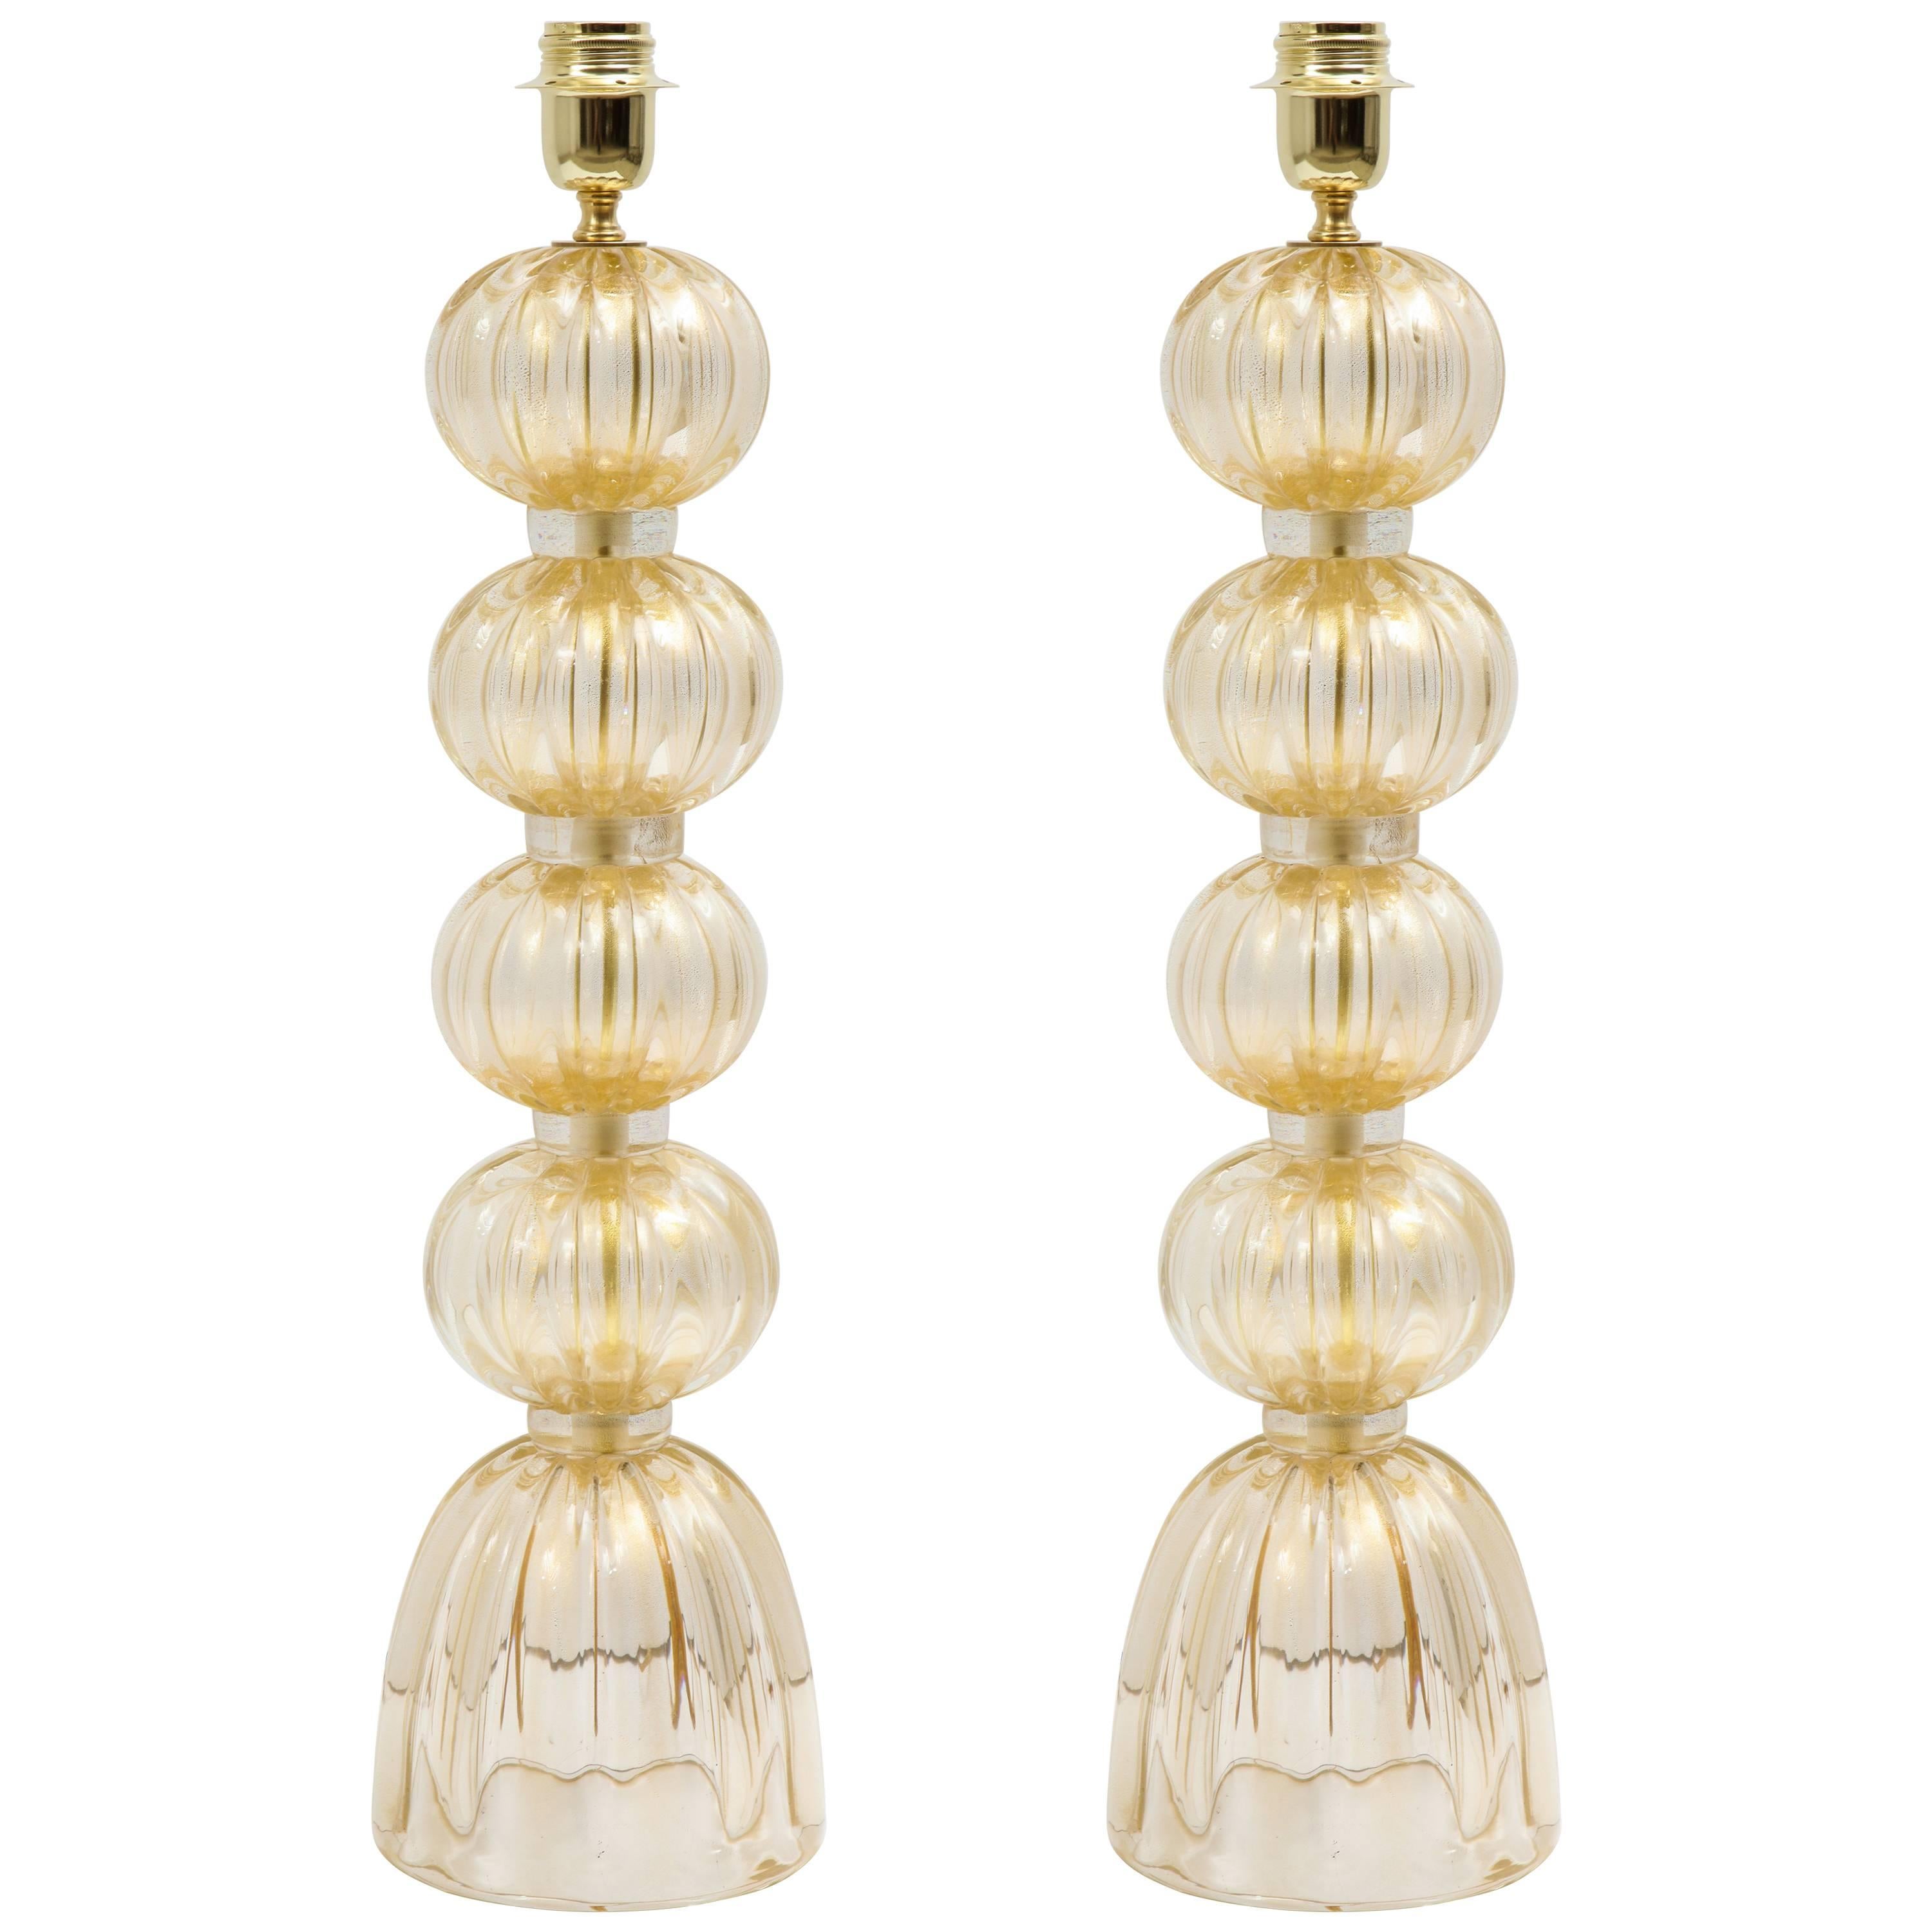 Magnificent Pair of Italian Murano Glass Lamps in 23-Karat Gold